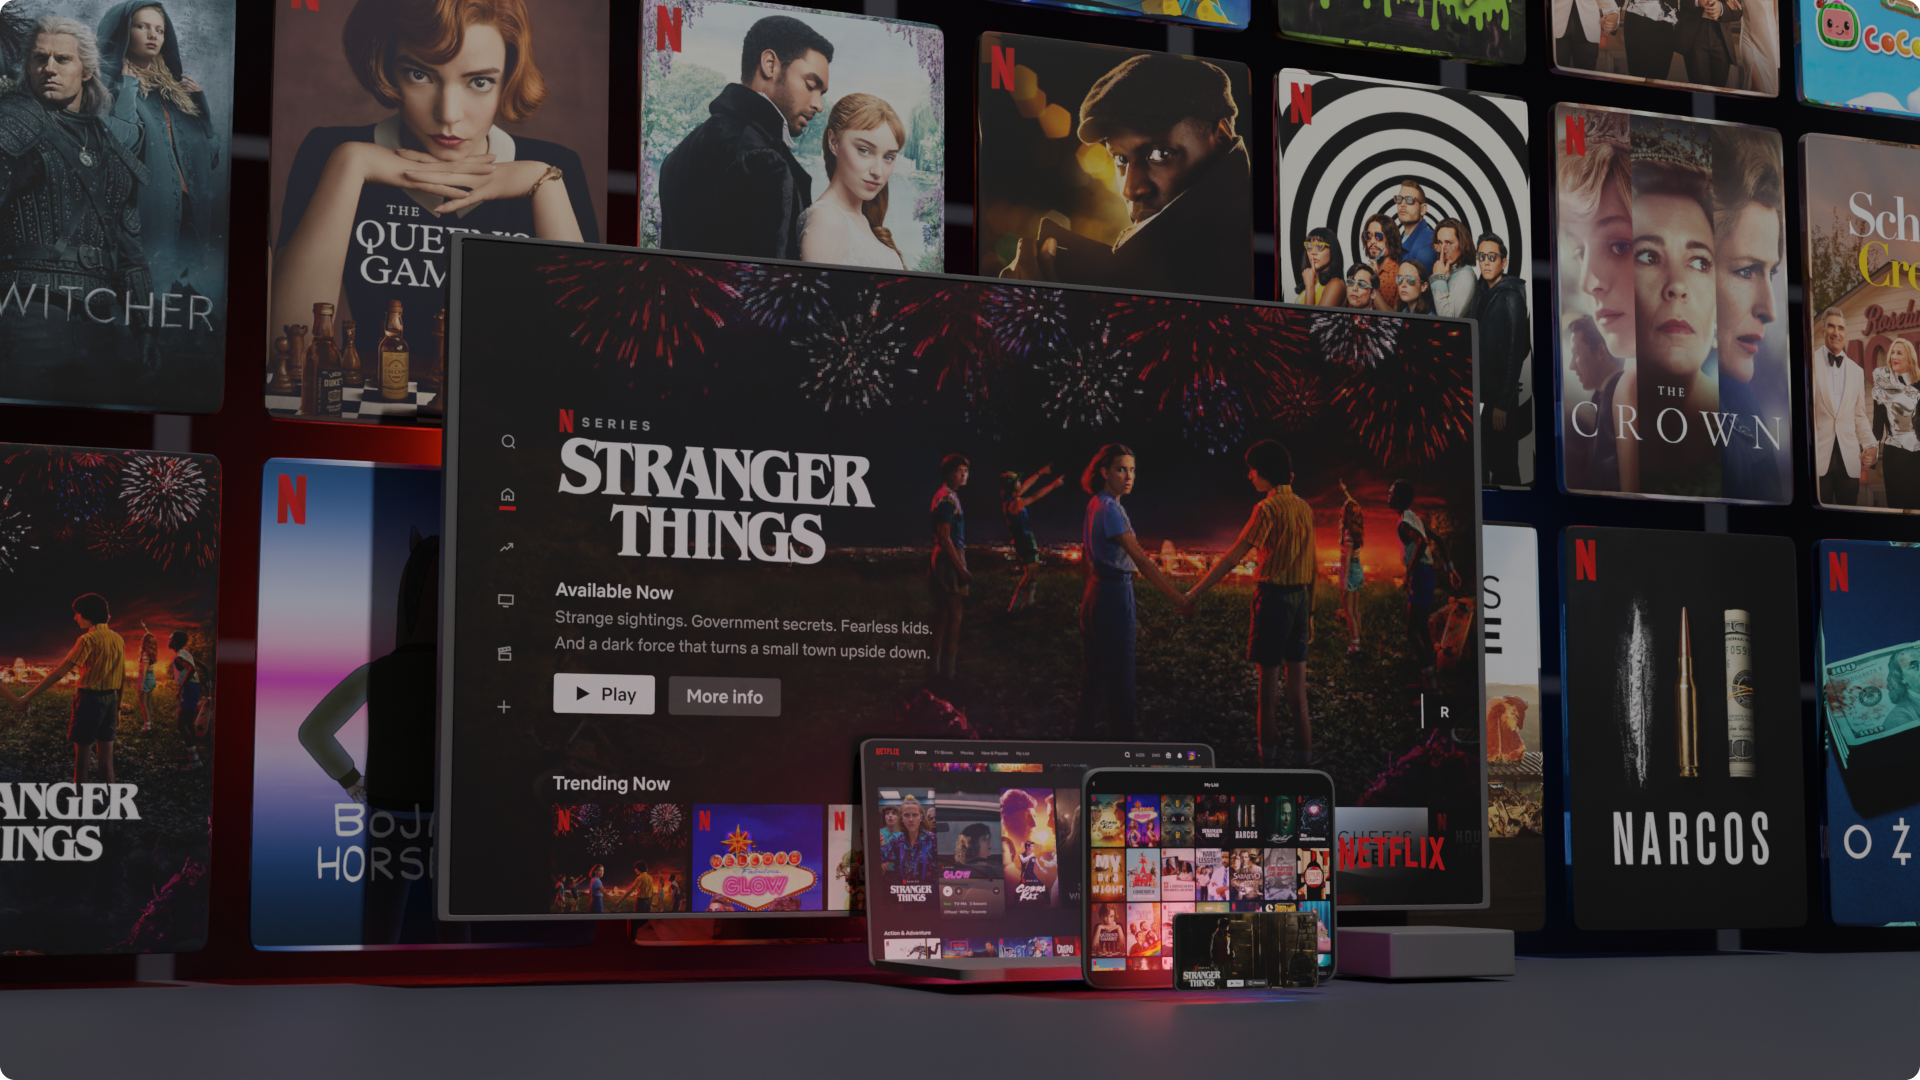 Netflix should lookout for new revenue streams